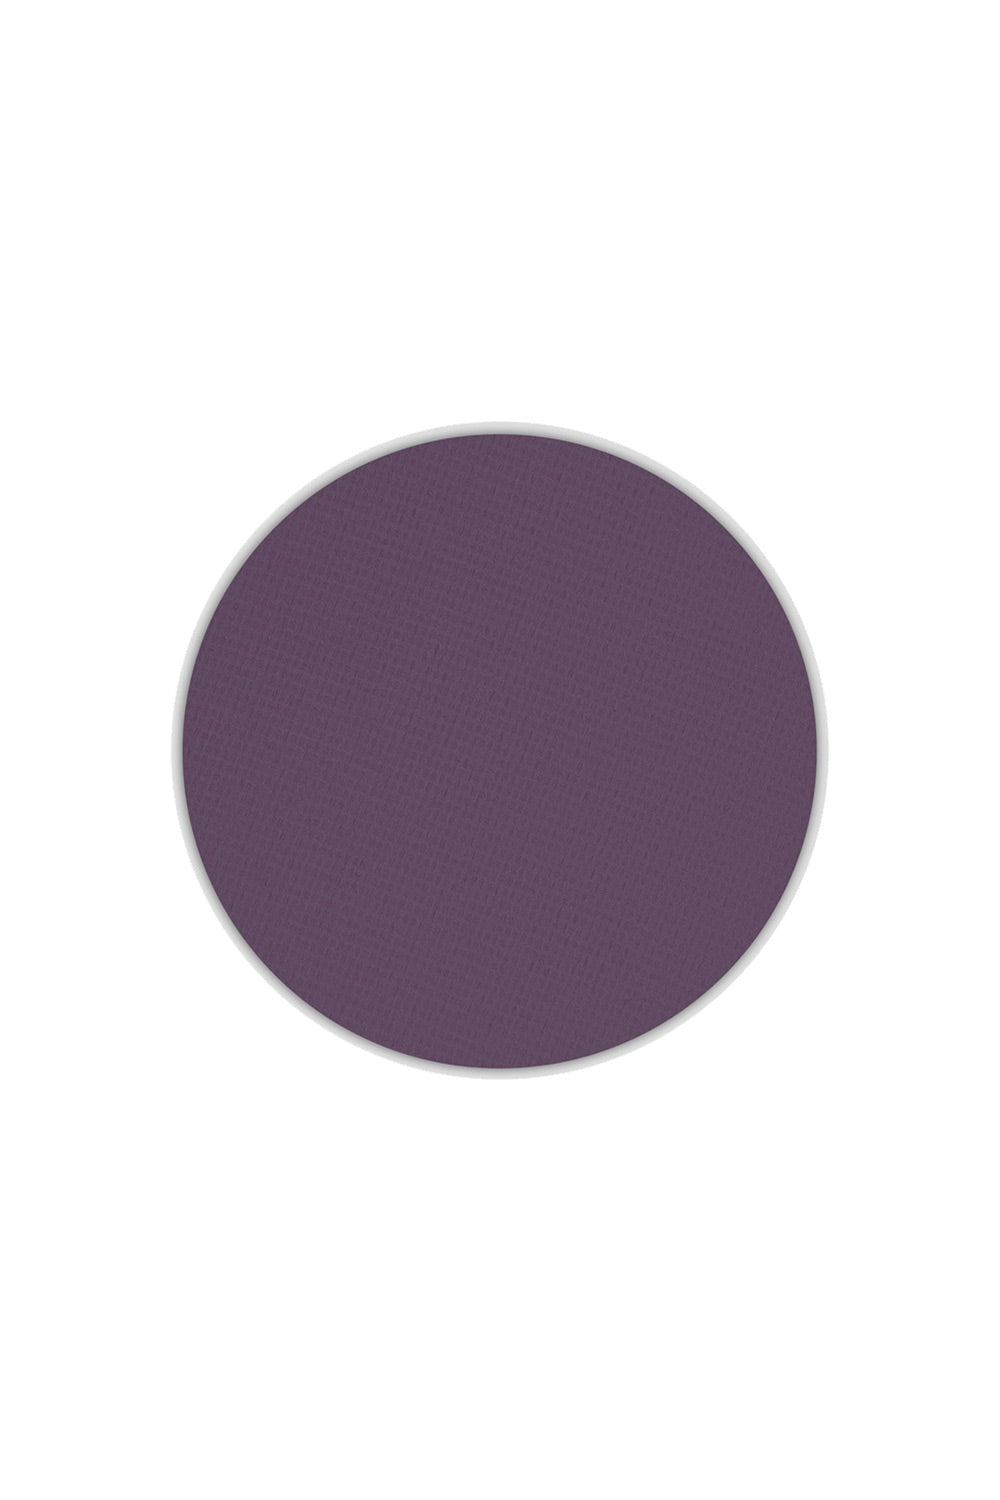 Winter Grape - Type 2 Eyeshadow Pan